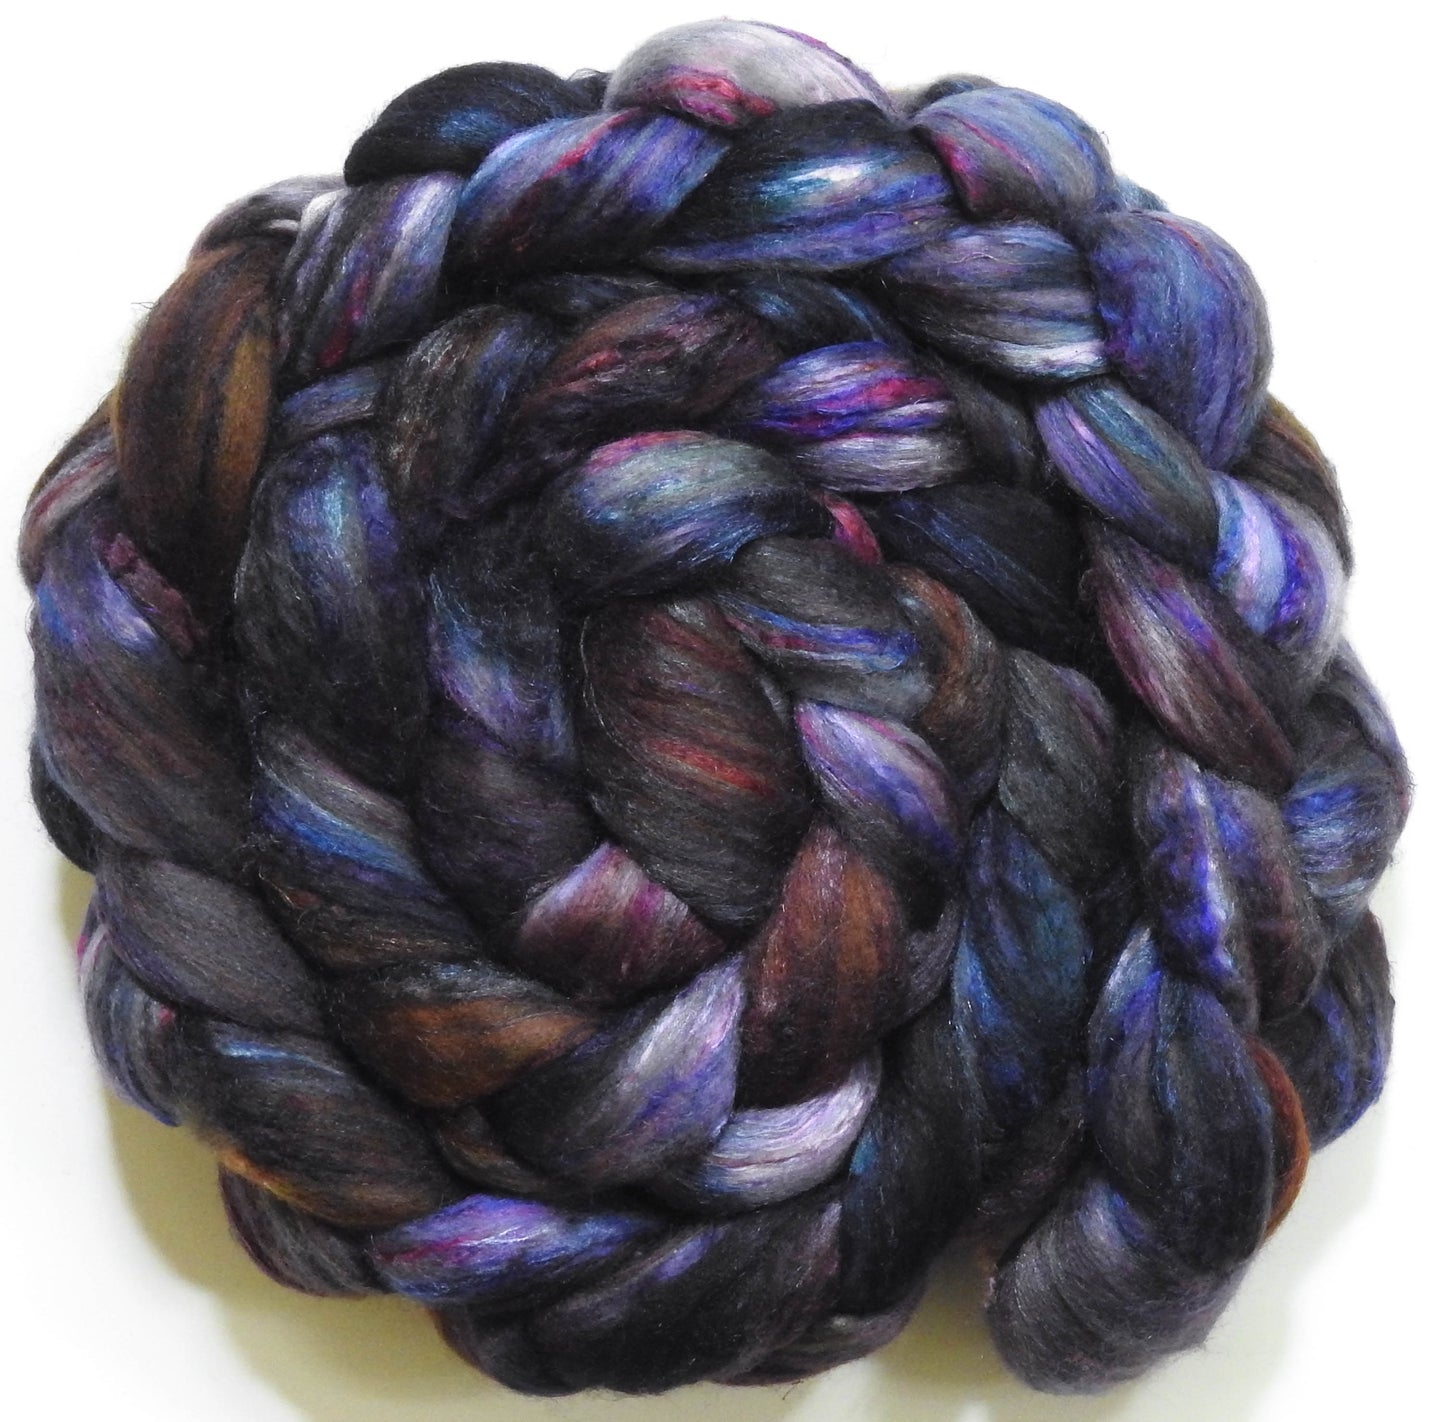 Singular - 39 (5.7 oz)-Batt in a Braid #39 - Merino/ Mulberry Silk / Sari Silk (50/25/25)